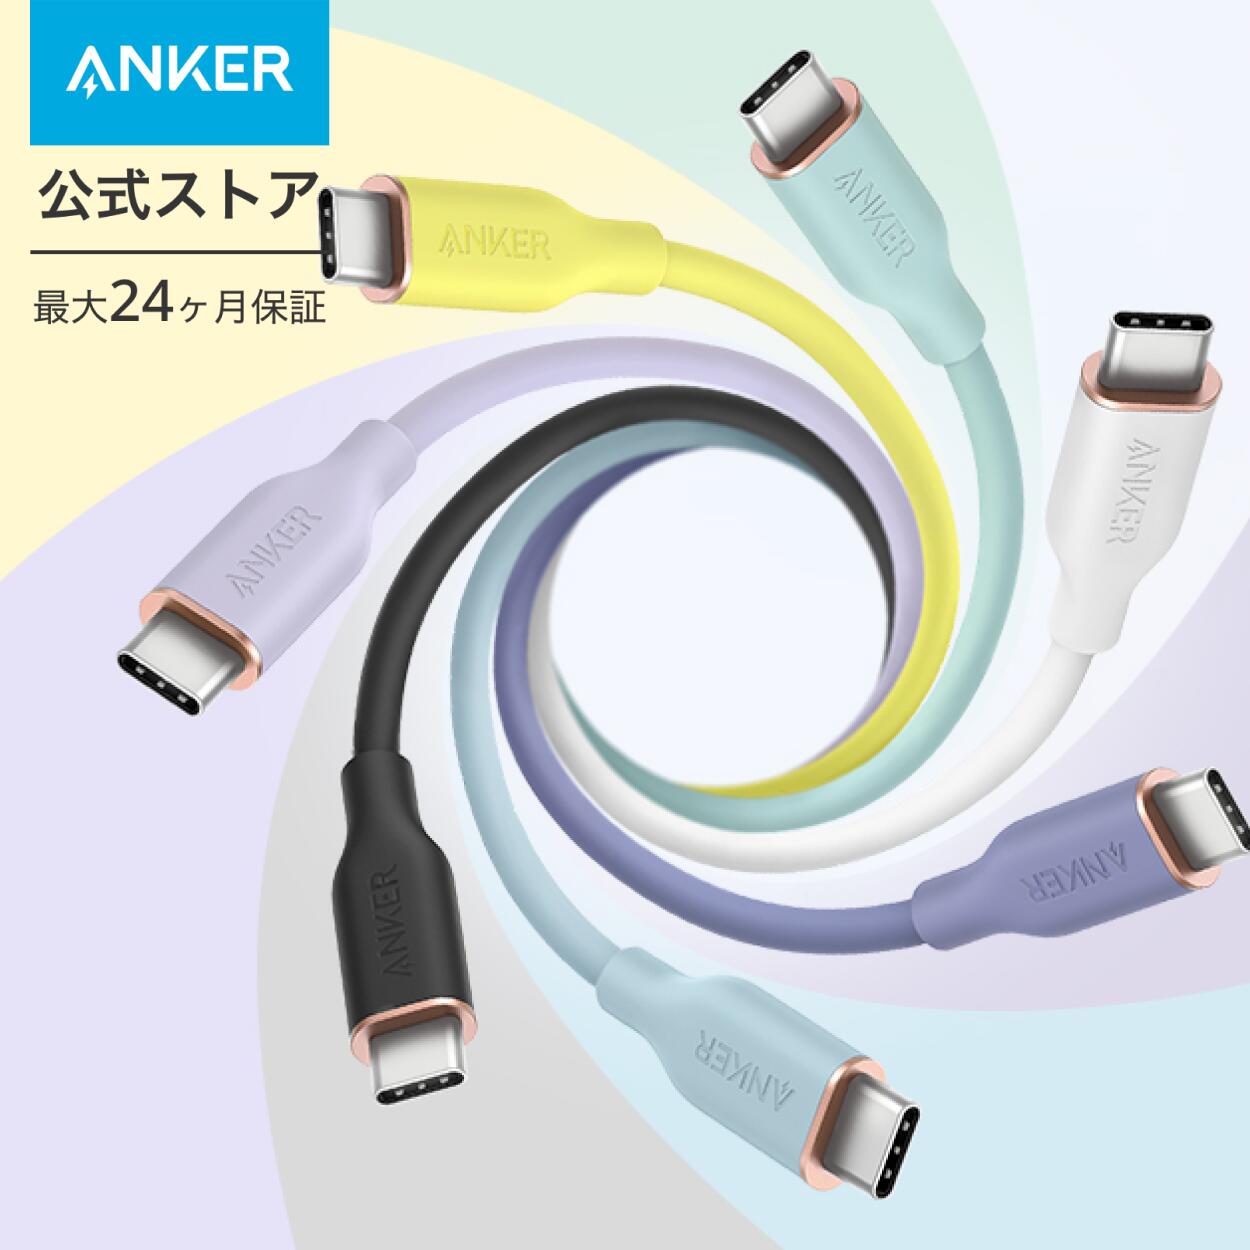 Anker PowerLine III Flow USB-C & USB-C ケーブル Anker絡まないケーブル PD対応 シリコン素材採用100W Galaxy iPad Pro MacBookPro/Air 各種対応 0.9m/1.8m